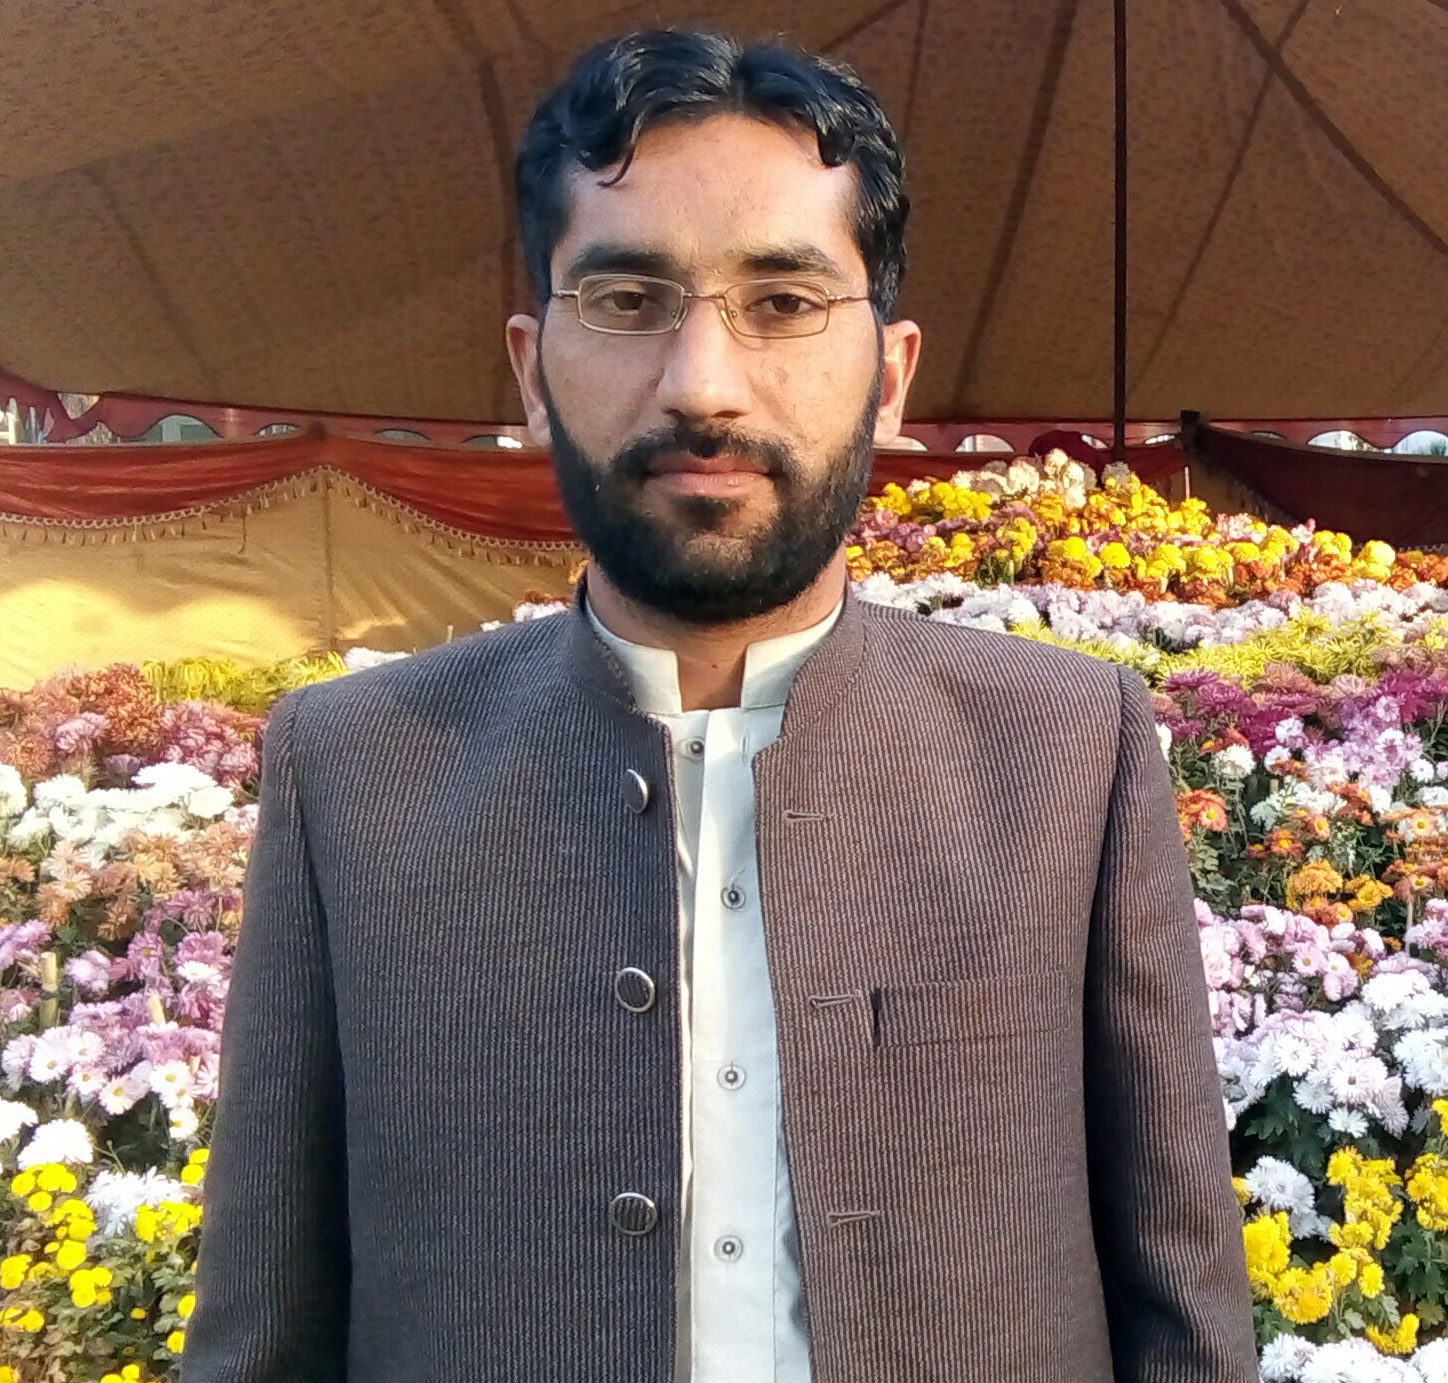 Mr. Dawood Khan